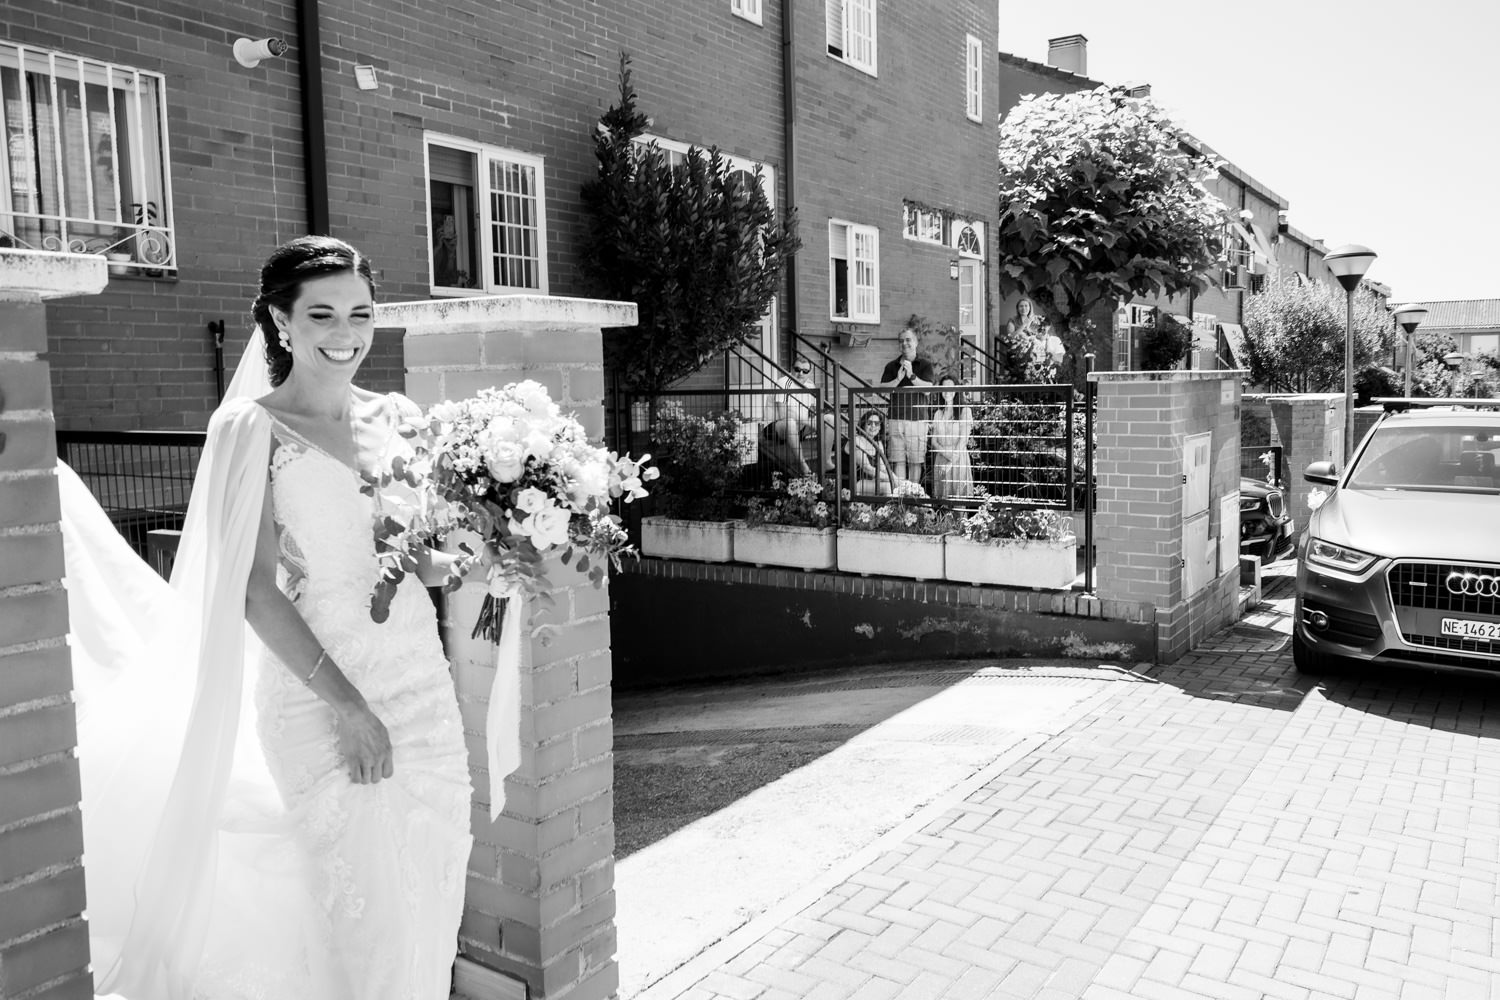 foto documental de la novia saliendo de casa para ir a la ceremonia